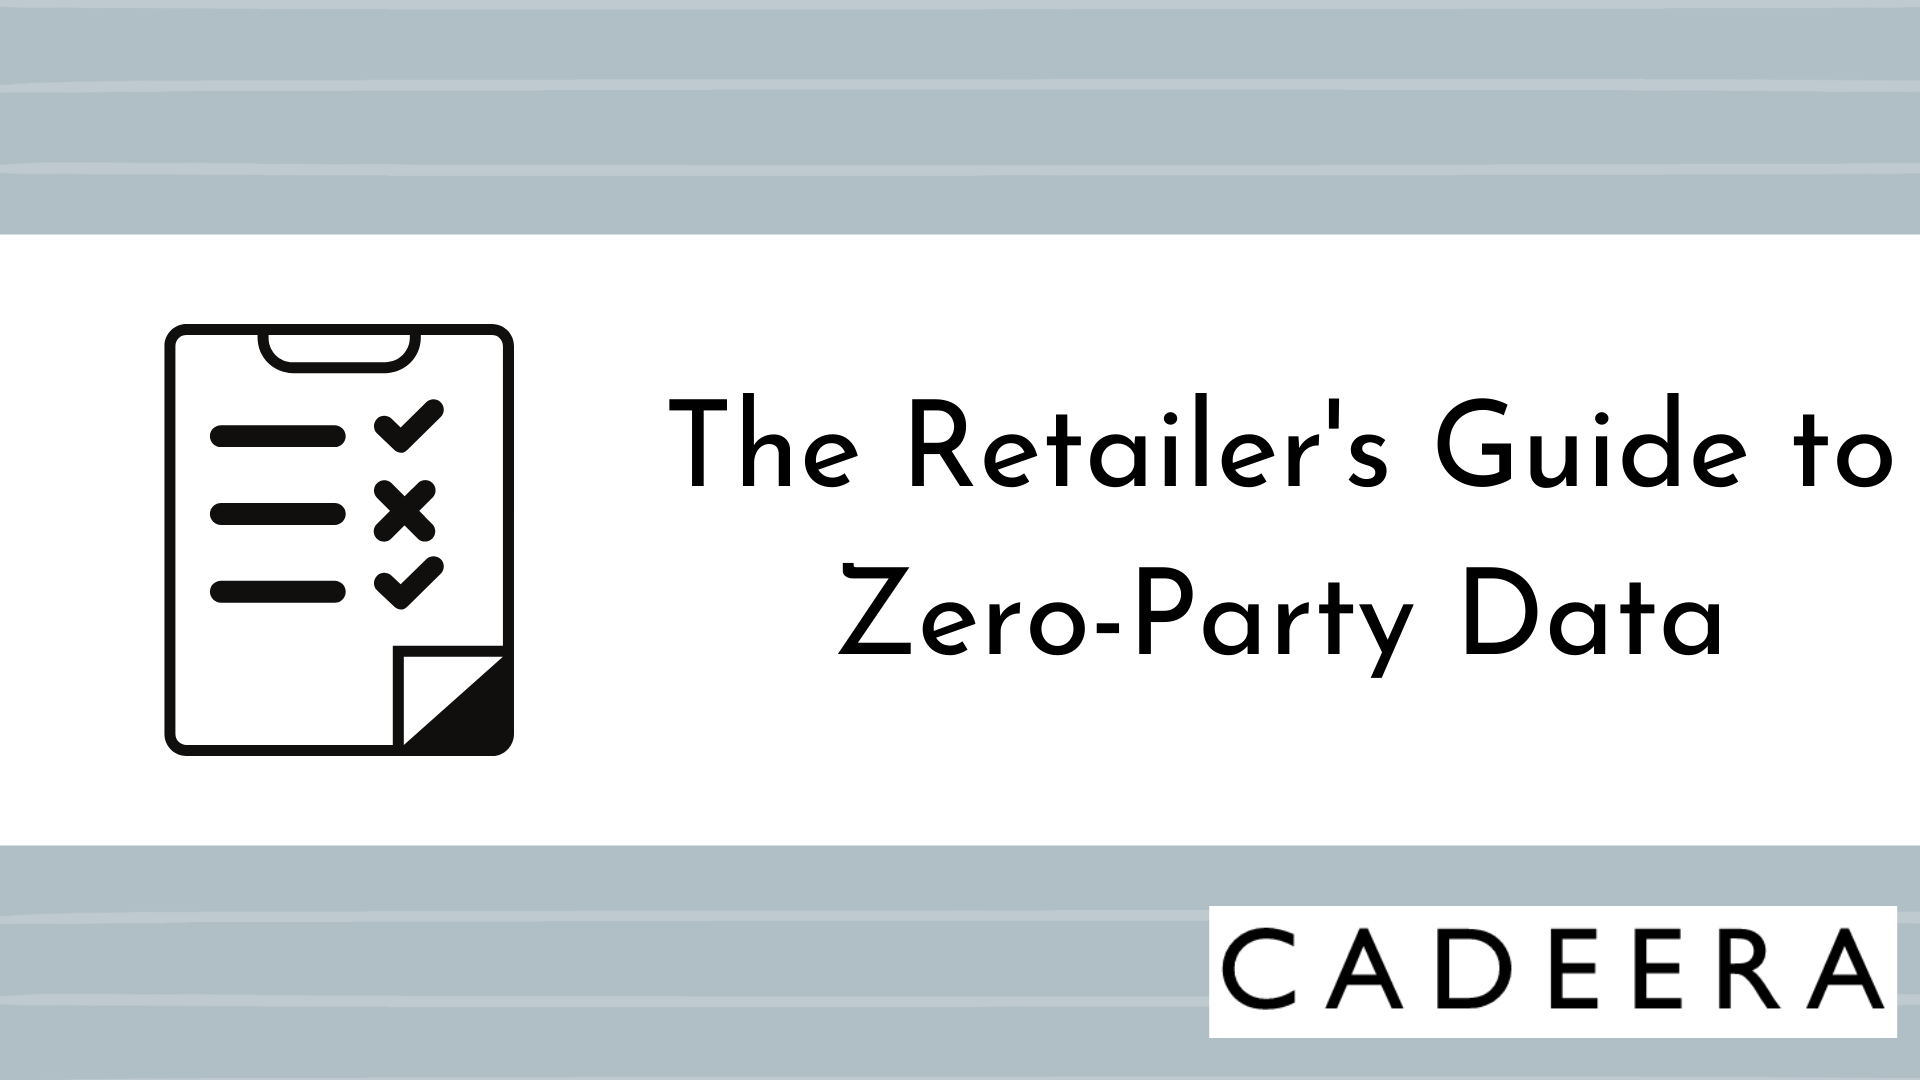 The Retailer’s Guide to Zero-Party Data